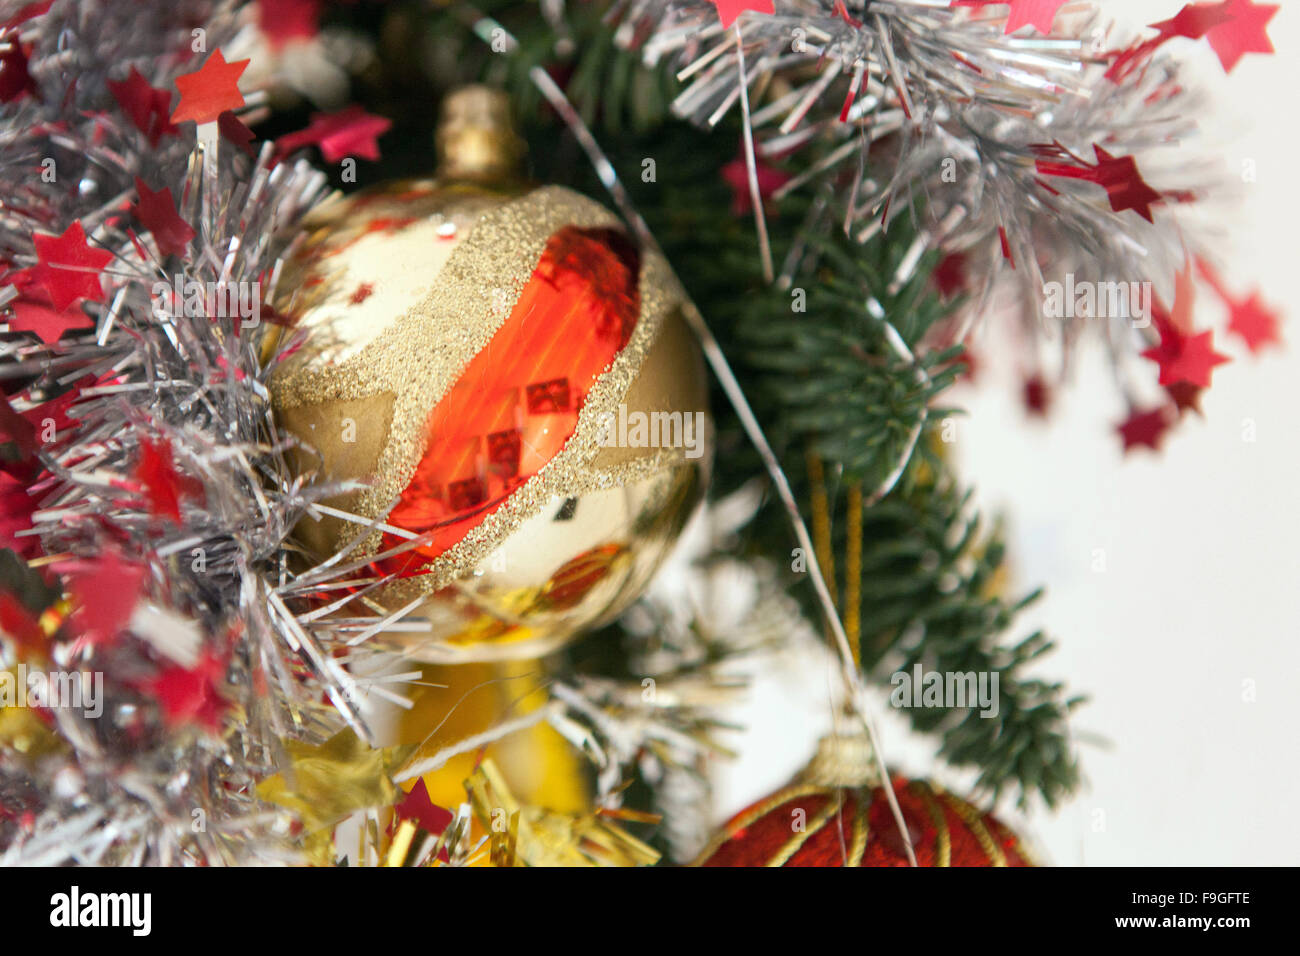 Close up of Christmas balls ornaments Stock Photo